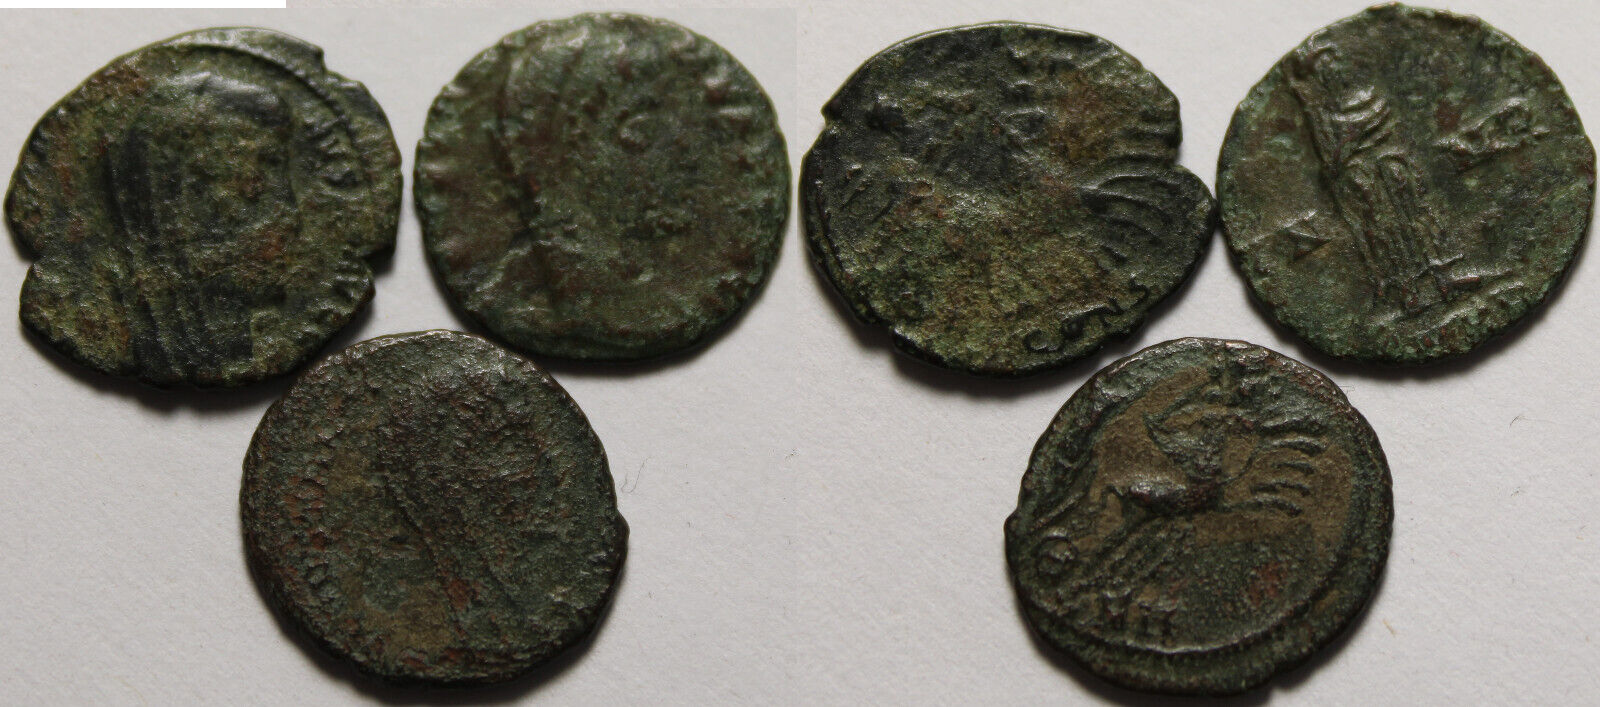 Lot genuine Ancient Roman coins veiled Constantine Victory quadriga hand of God Без бренда - фотография #3